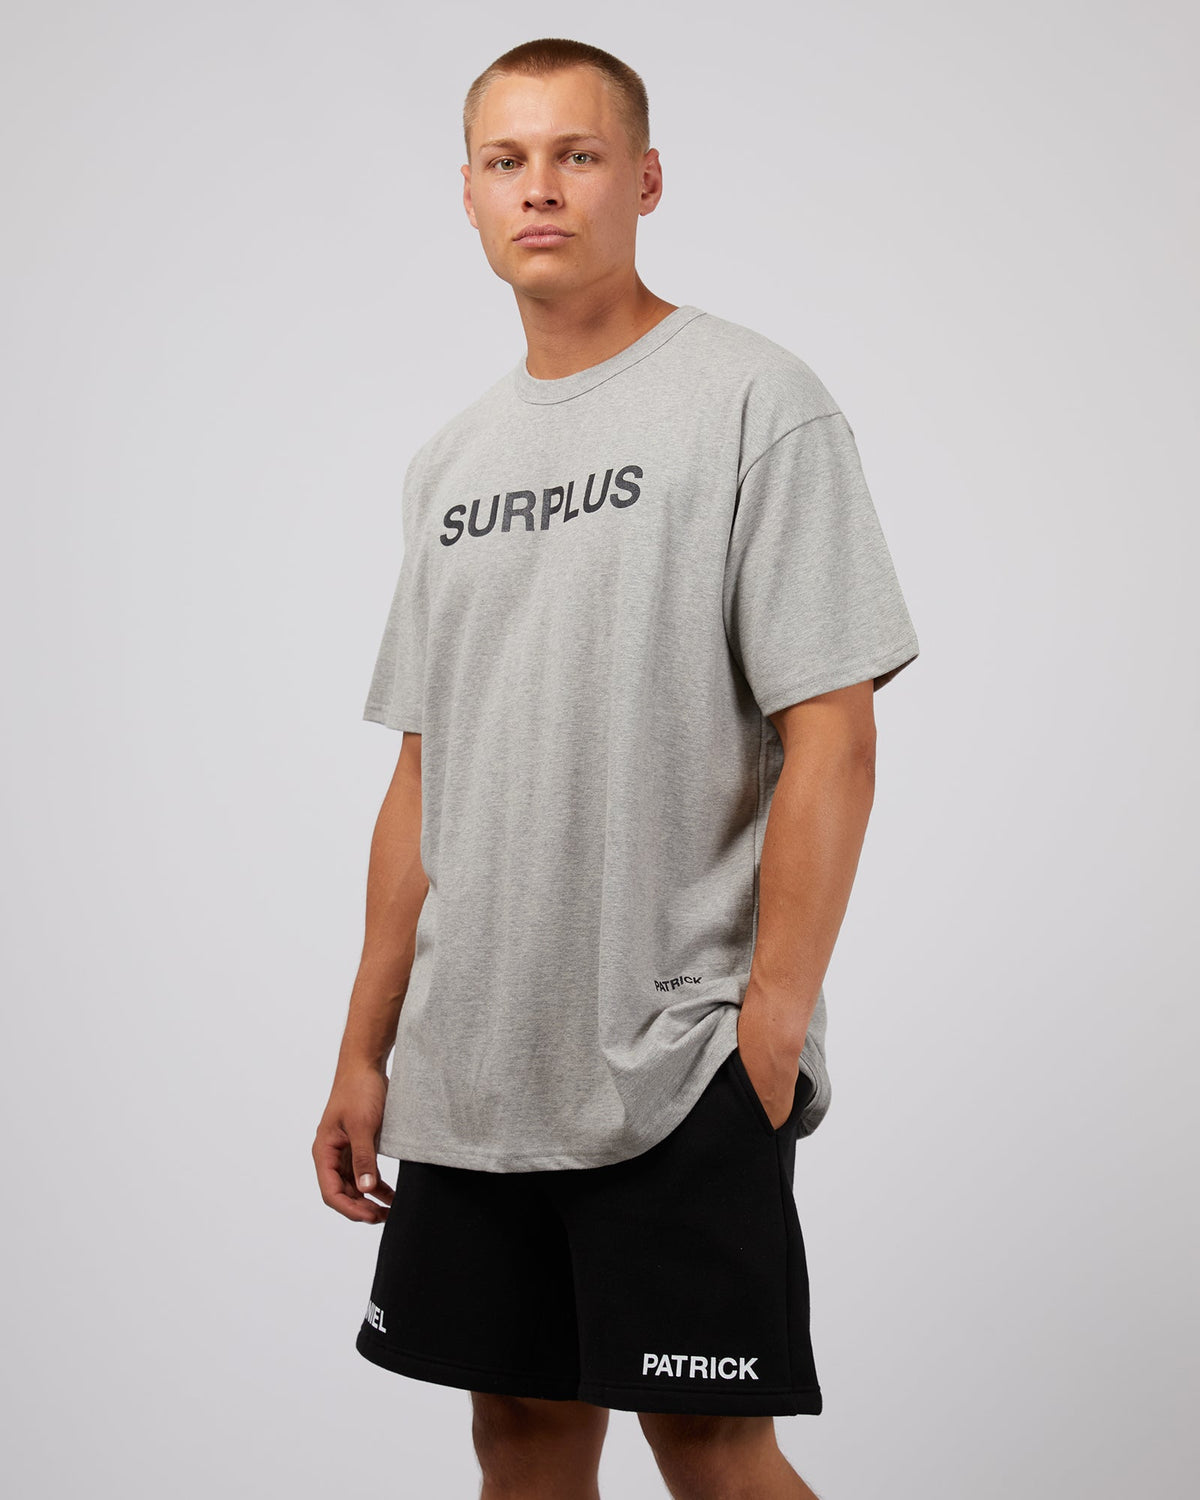 Surplus Daniel Patrick-Surplus Logo Tee Grey-Edge Clothing